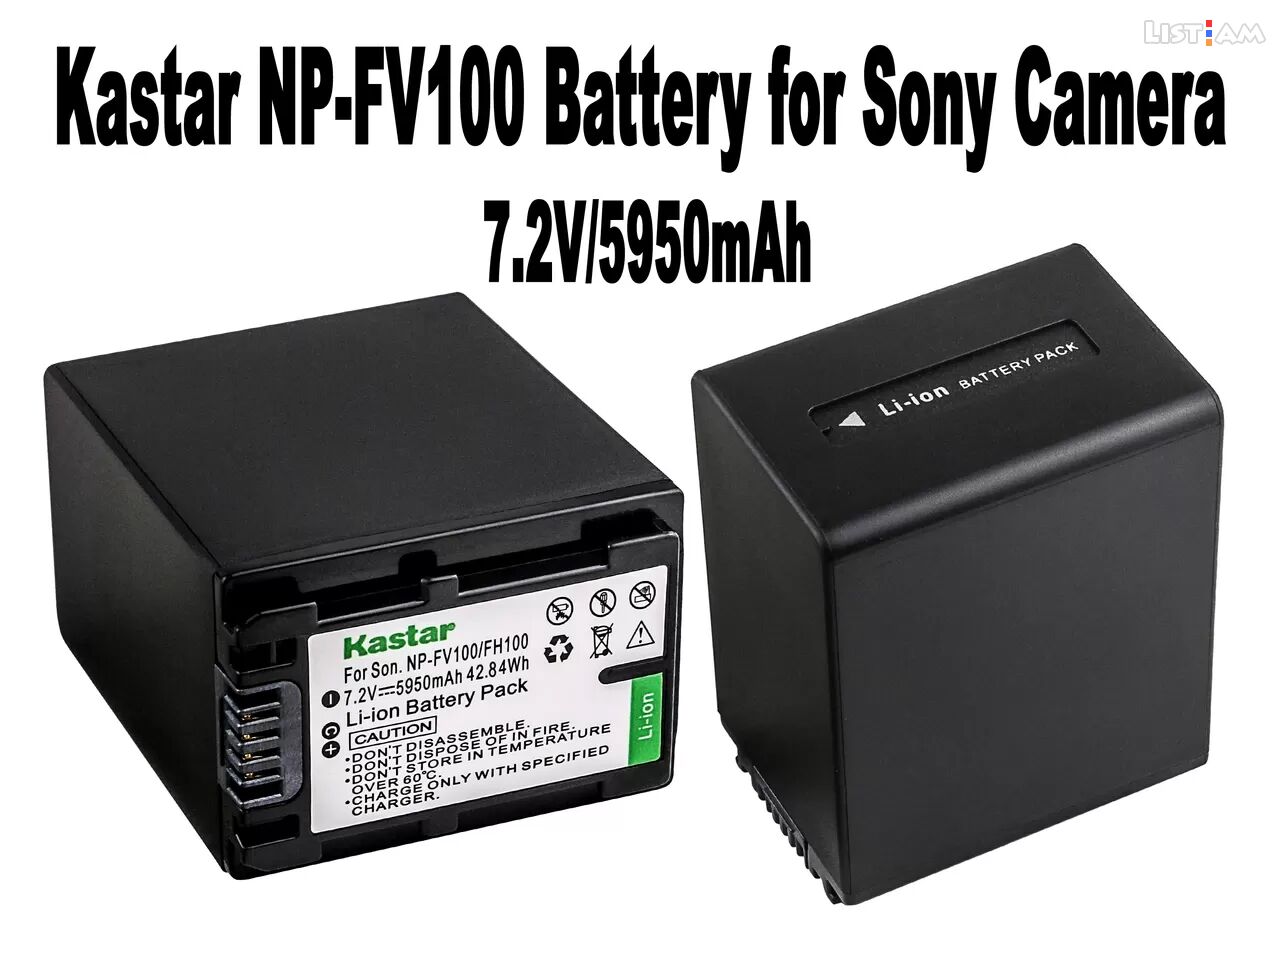 Sony NP-FV100 Kastar